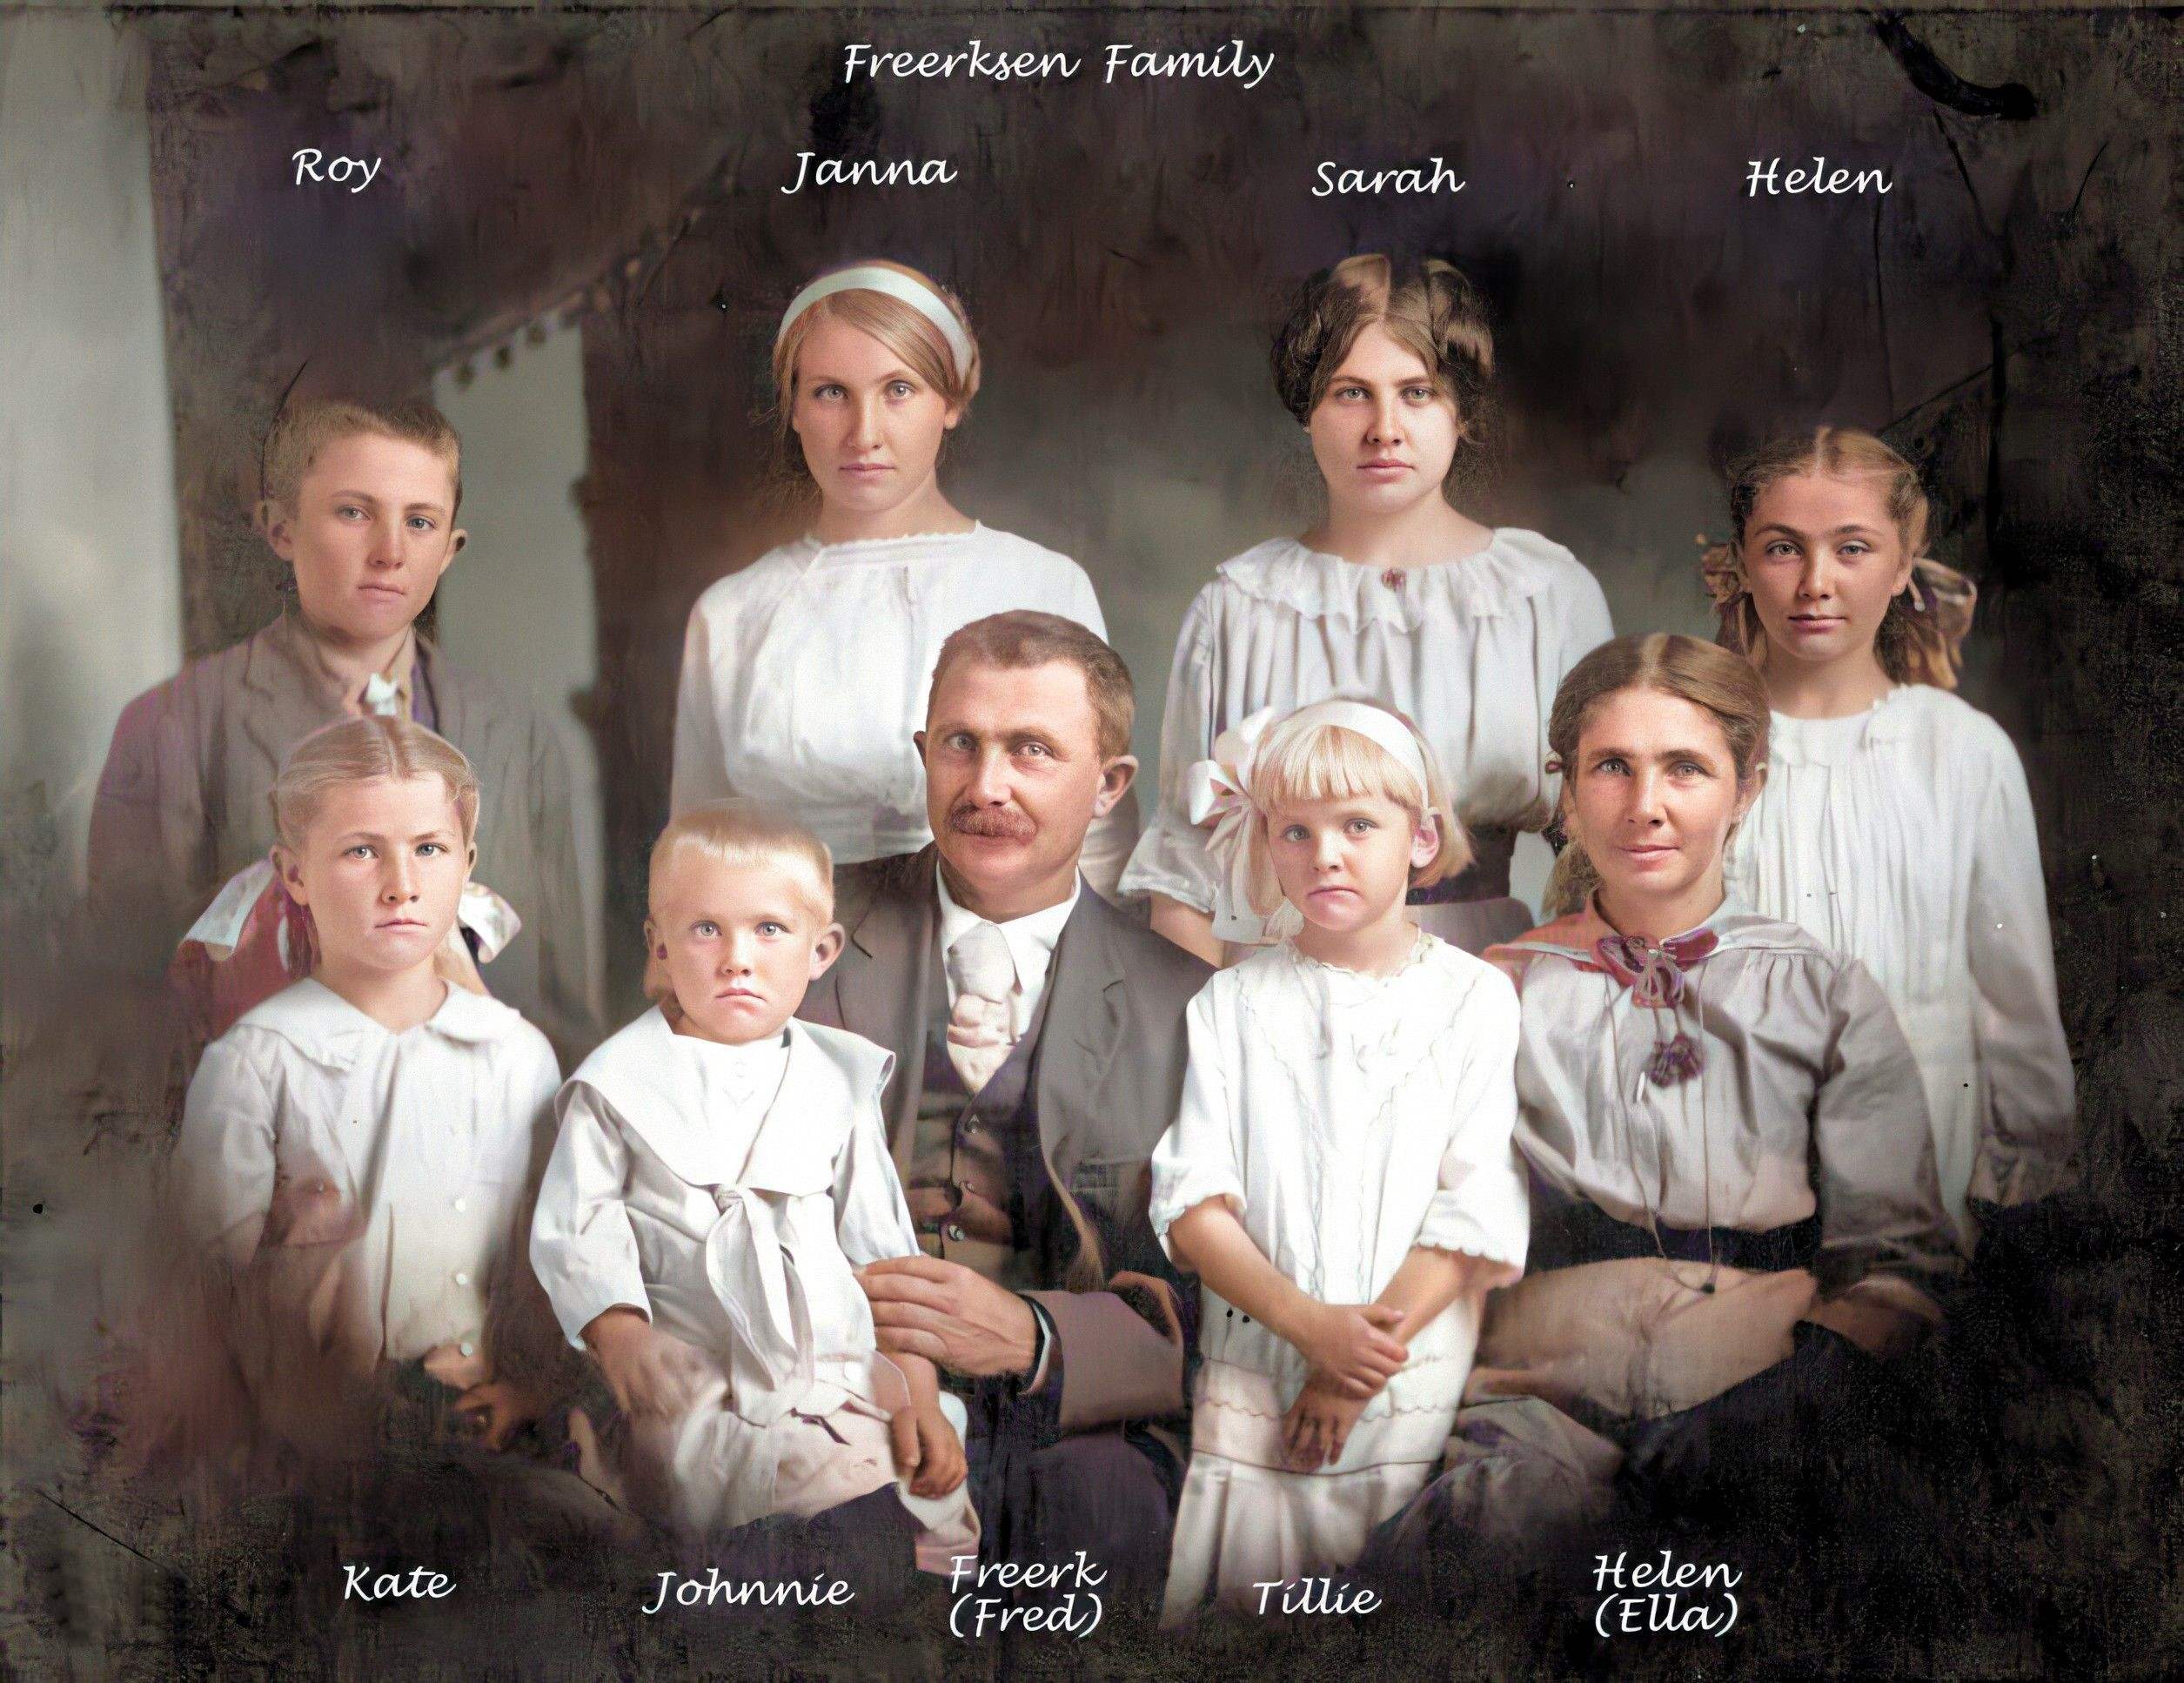 Fred and Ella Freerksen Family